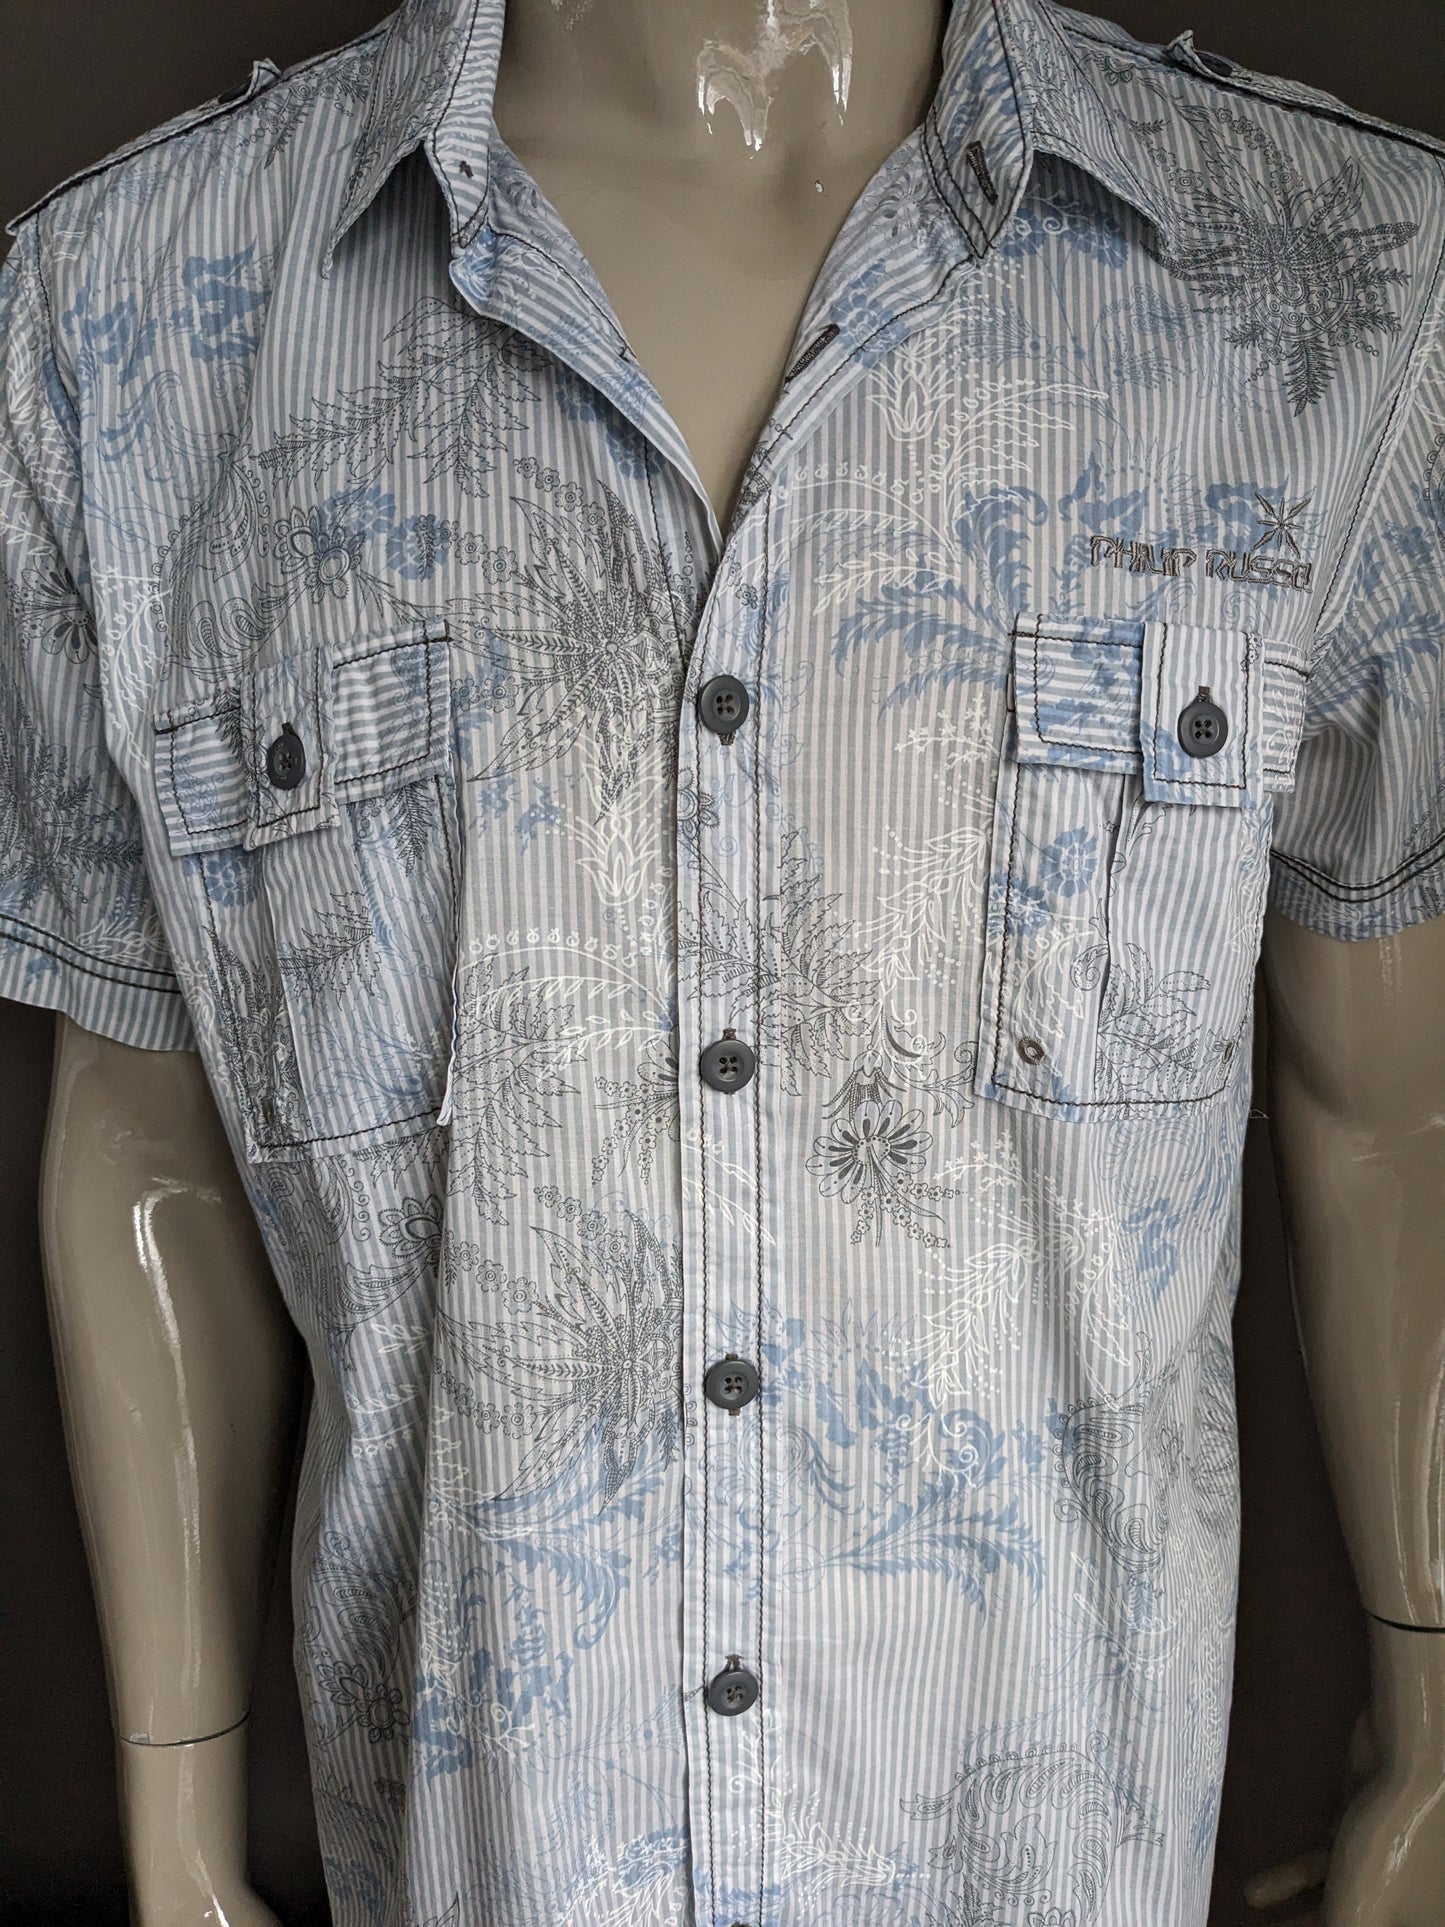 Philip Russel Shirt Short Sleeve. Impression bleu gris. Taille xl.